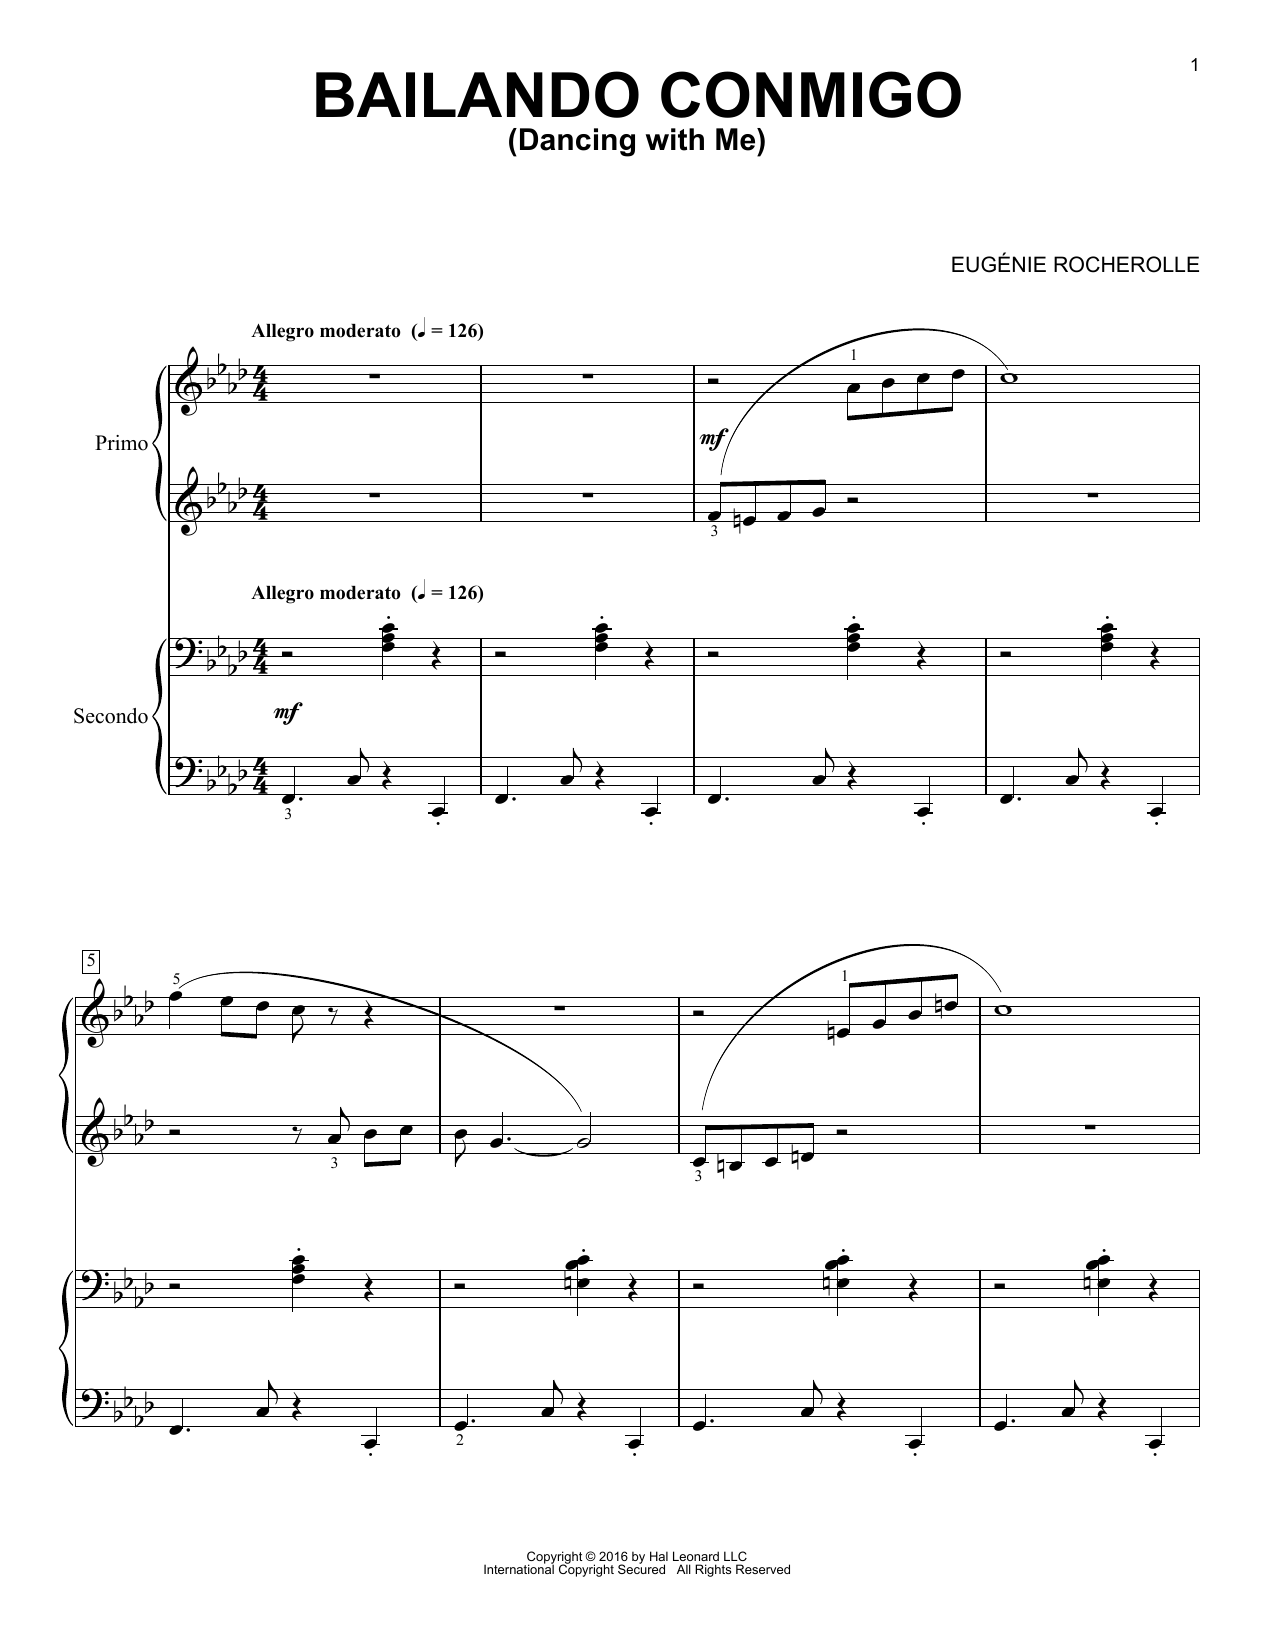 Eugénie Rocherolle Bailando Conmigo Sheet Music Notes & Chords for Piano - Download or Print PDF